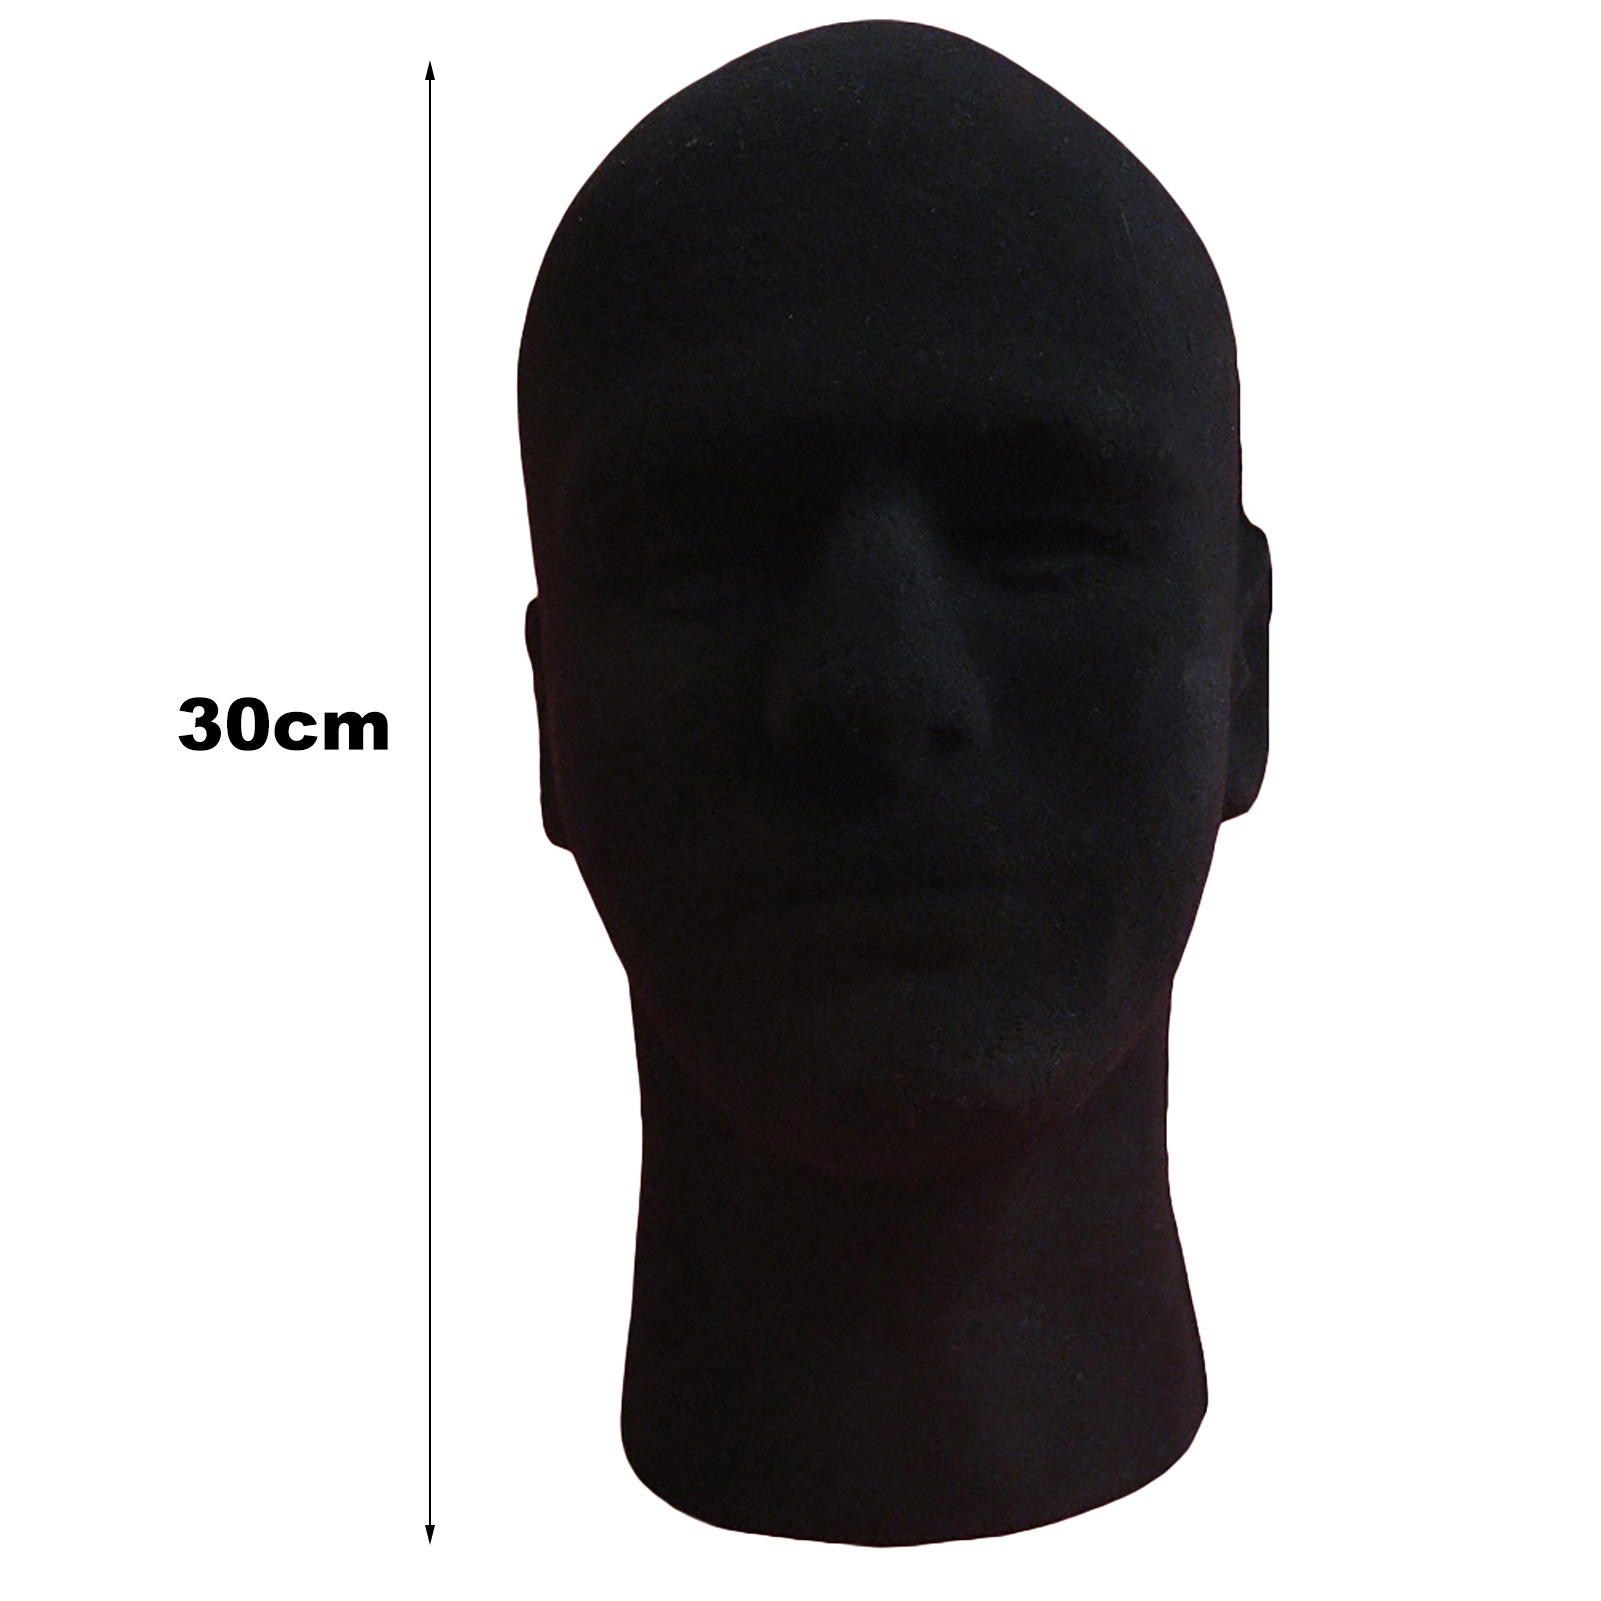 Sunjoy Tech Male Wigs Display Mannequin Head Stand Model Headsets Mount Styrofoam Foam Flocking Black - image 5 of 8